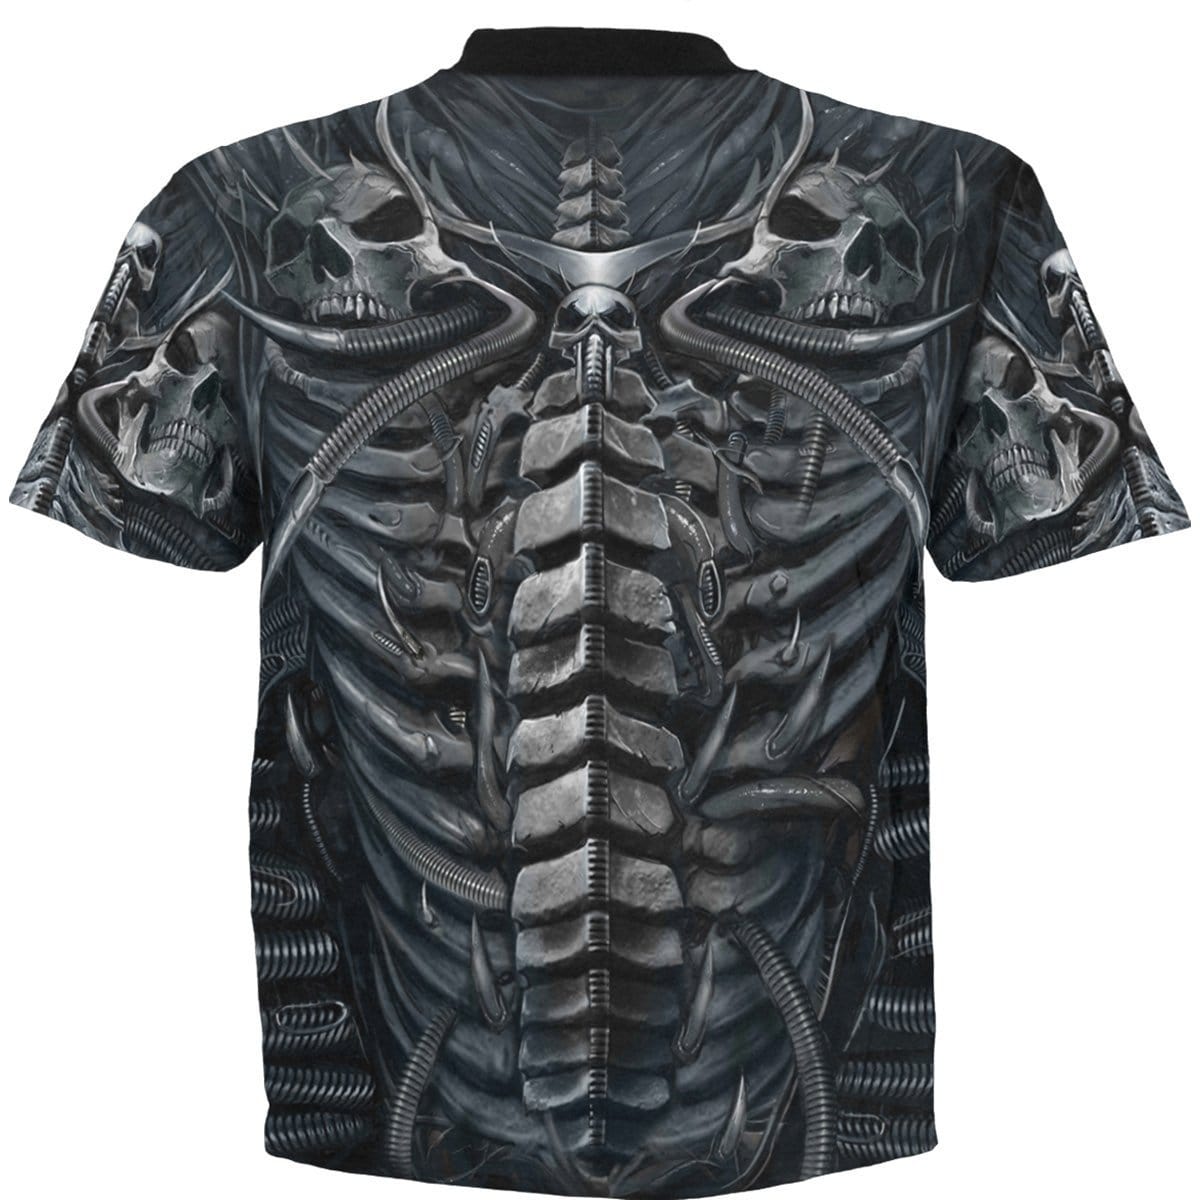 SKULL ARMOUR - Allover T-Shirt Black - Spiral USA